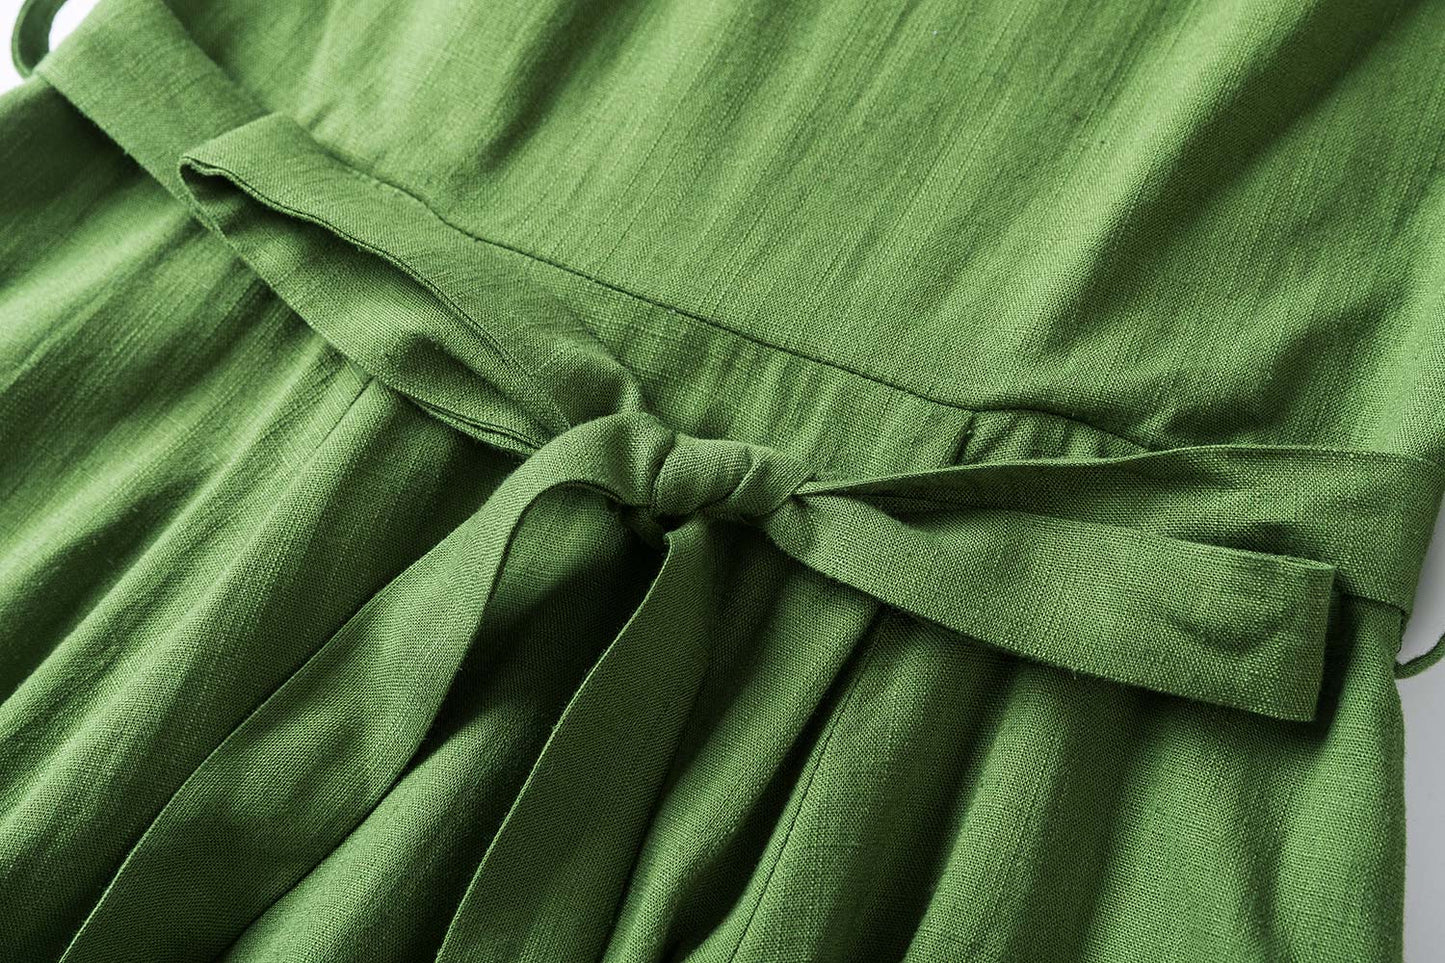 Xiaolizi handmade 50s sleeveless swing midi dress in Green 2346#